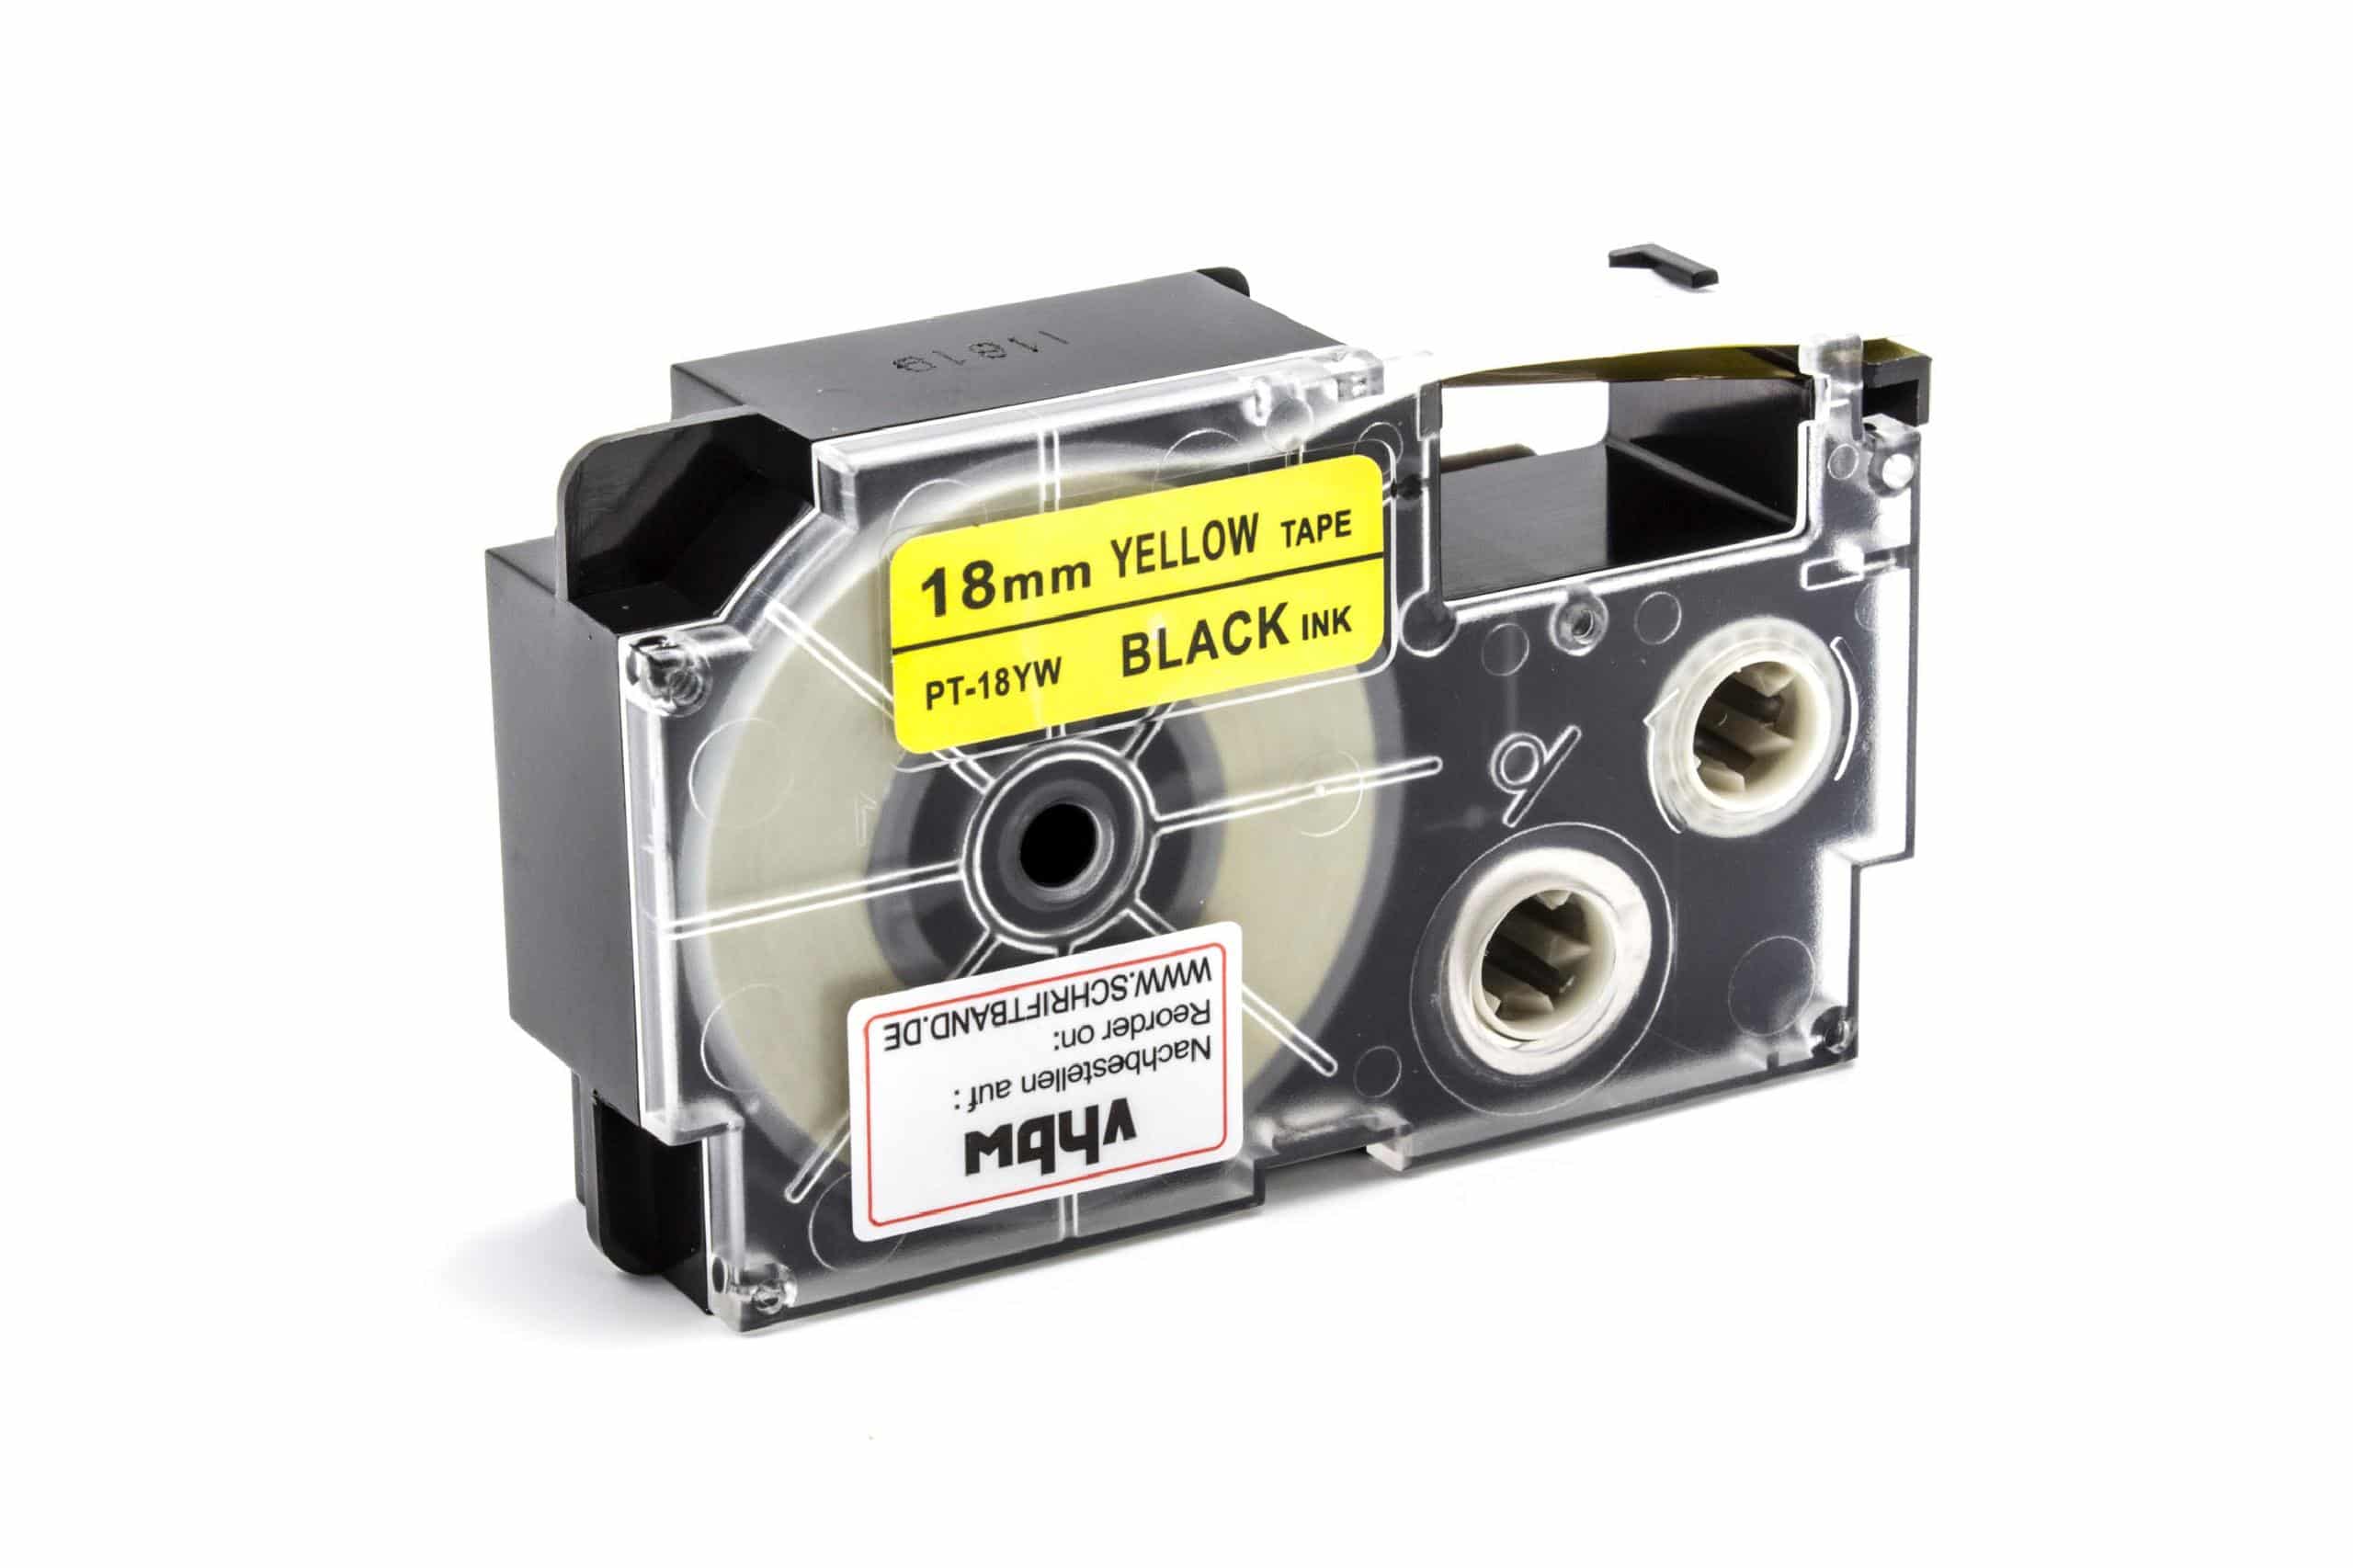 Cassetta nastro sostituisce Casio XR-18YW1, XR-18YW per etichettatrice Casio 18mm nero su giallo, pet+ RESIN